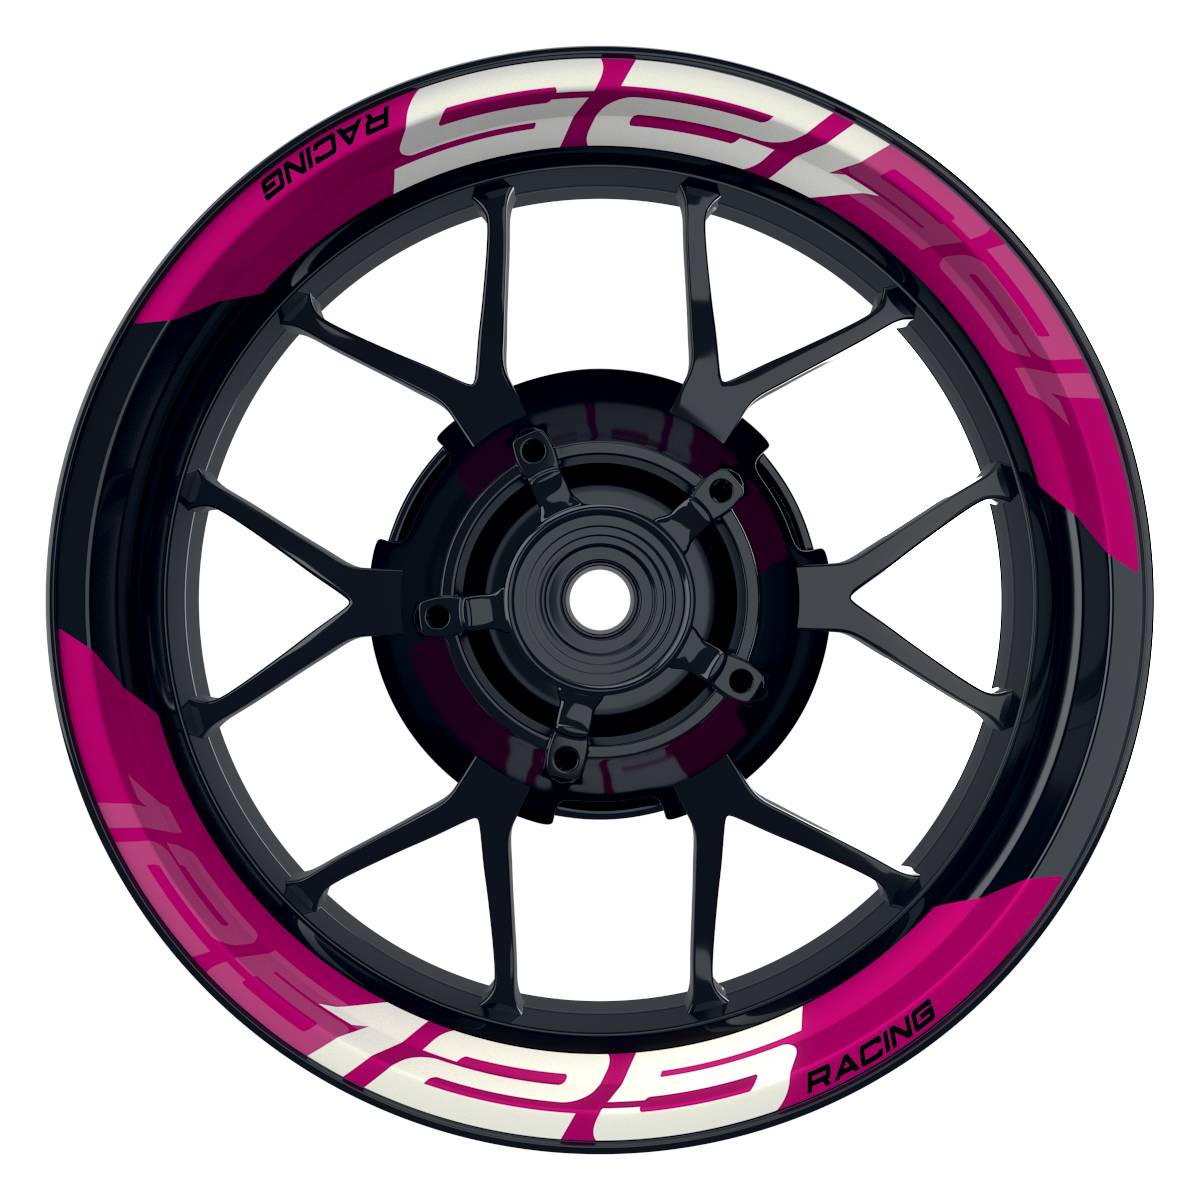 Wheelsticker Felgenaufkleber KTM Racing 125 einfarbig V2 pink Frontansicht